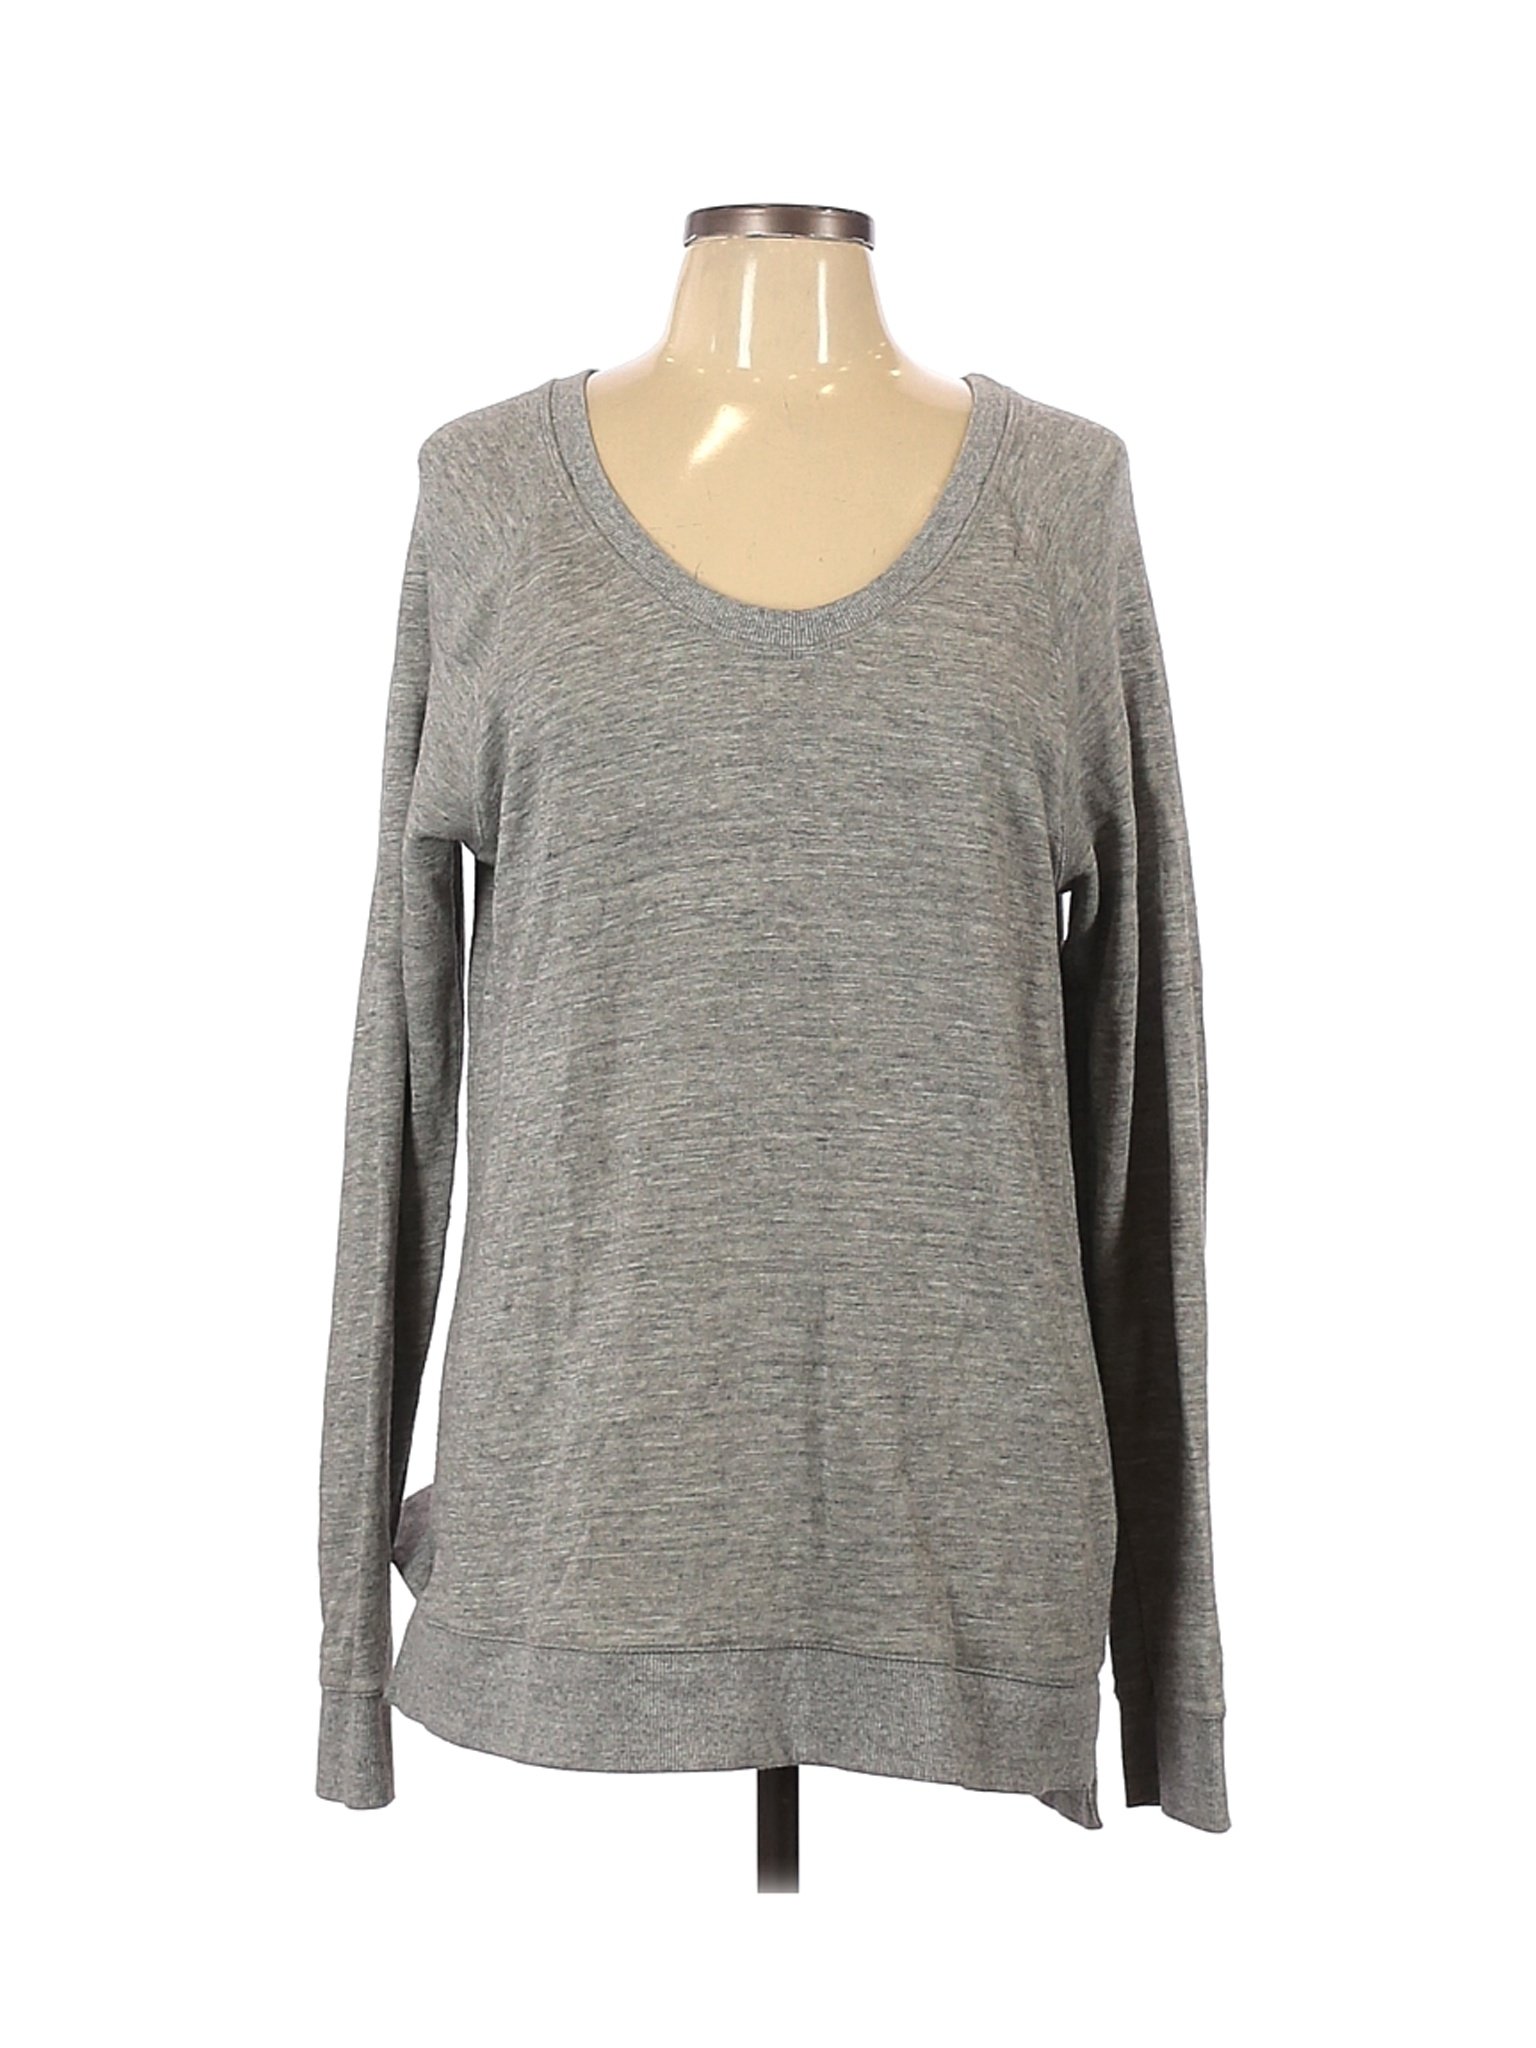 Old Navy Women Gray Sweatshirt L | eBay